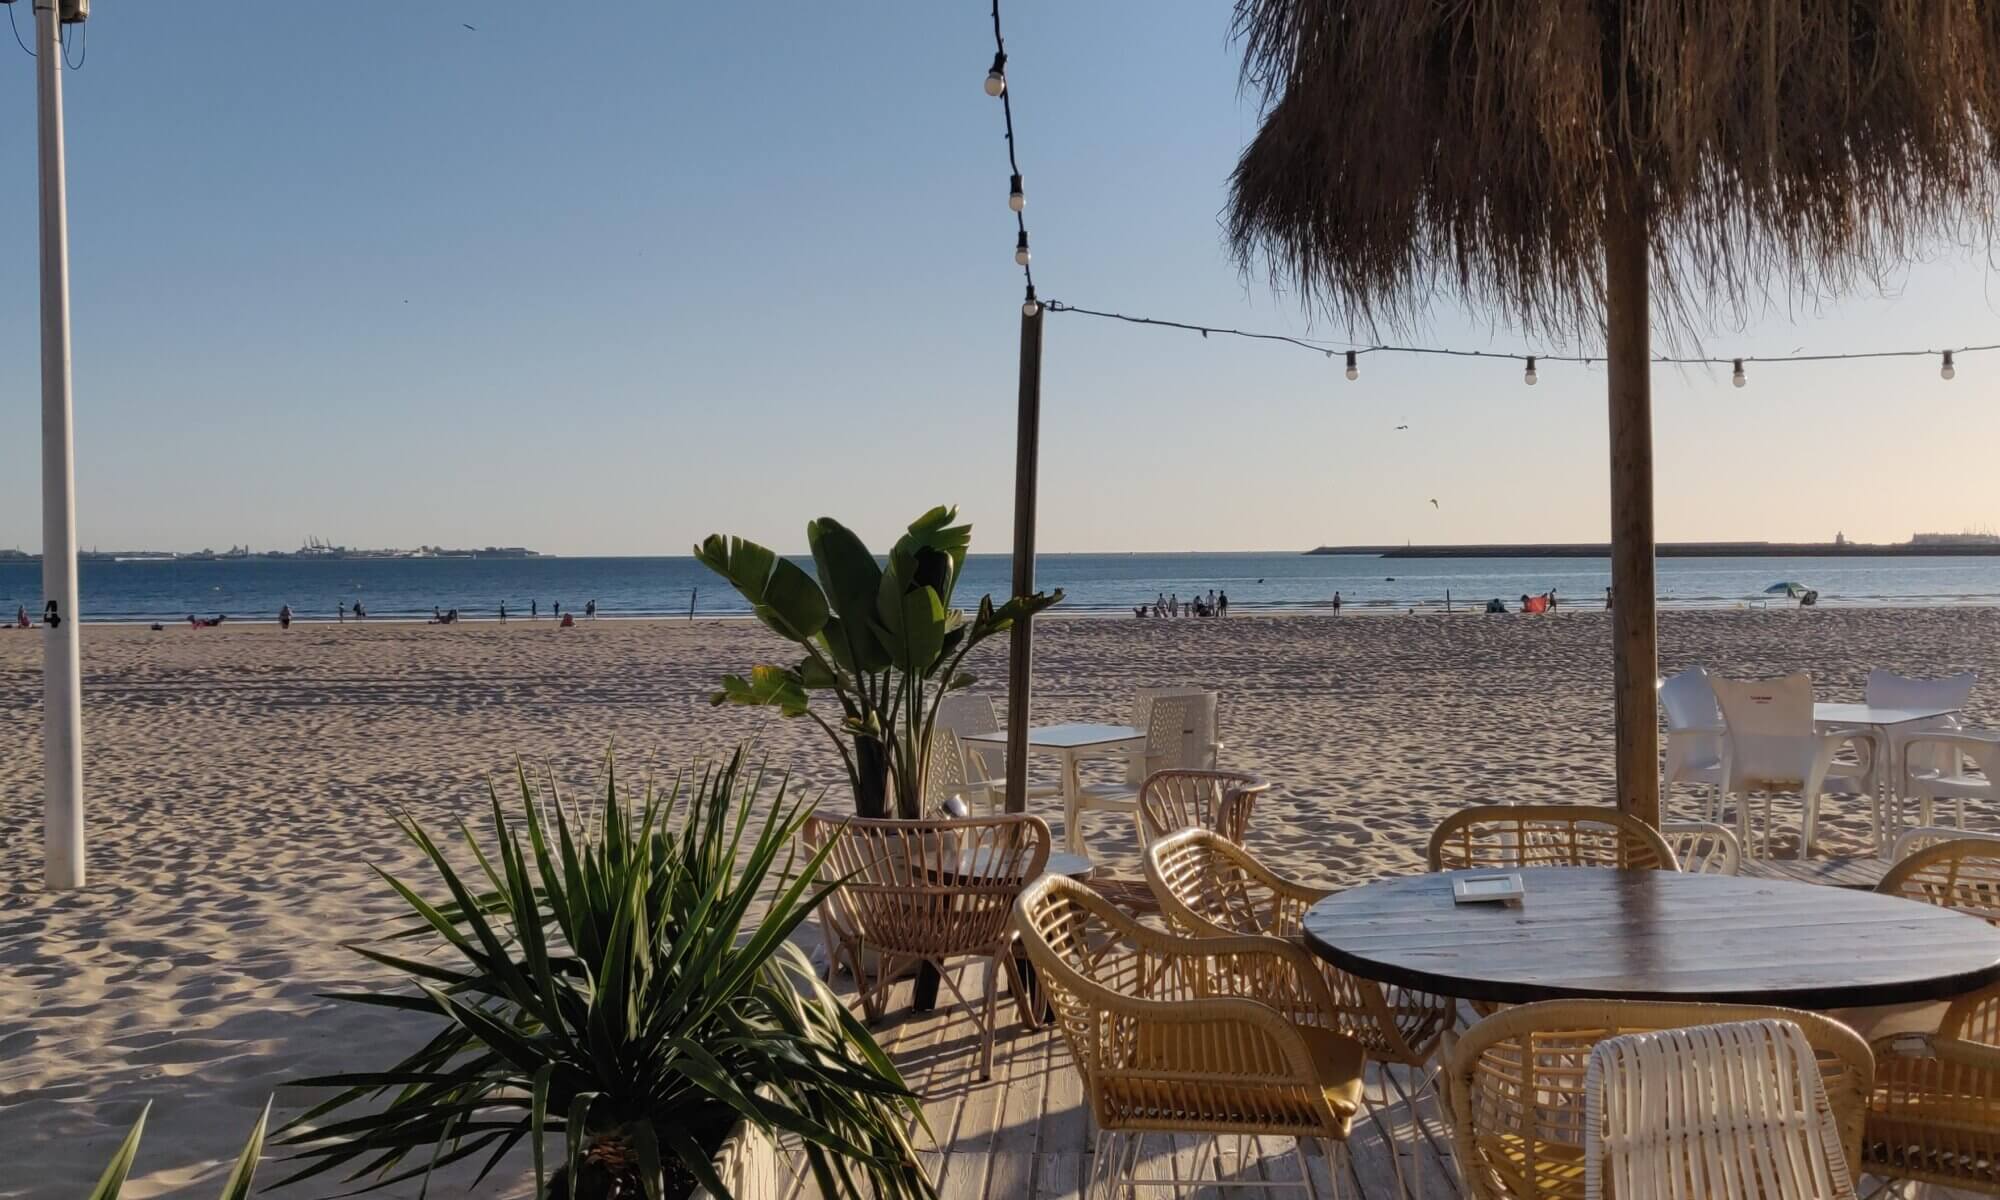 View from a beach restaurant